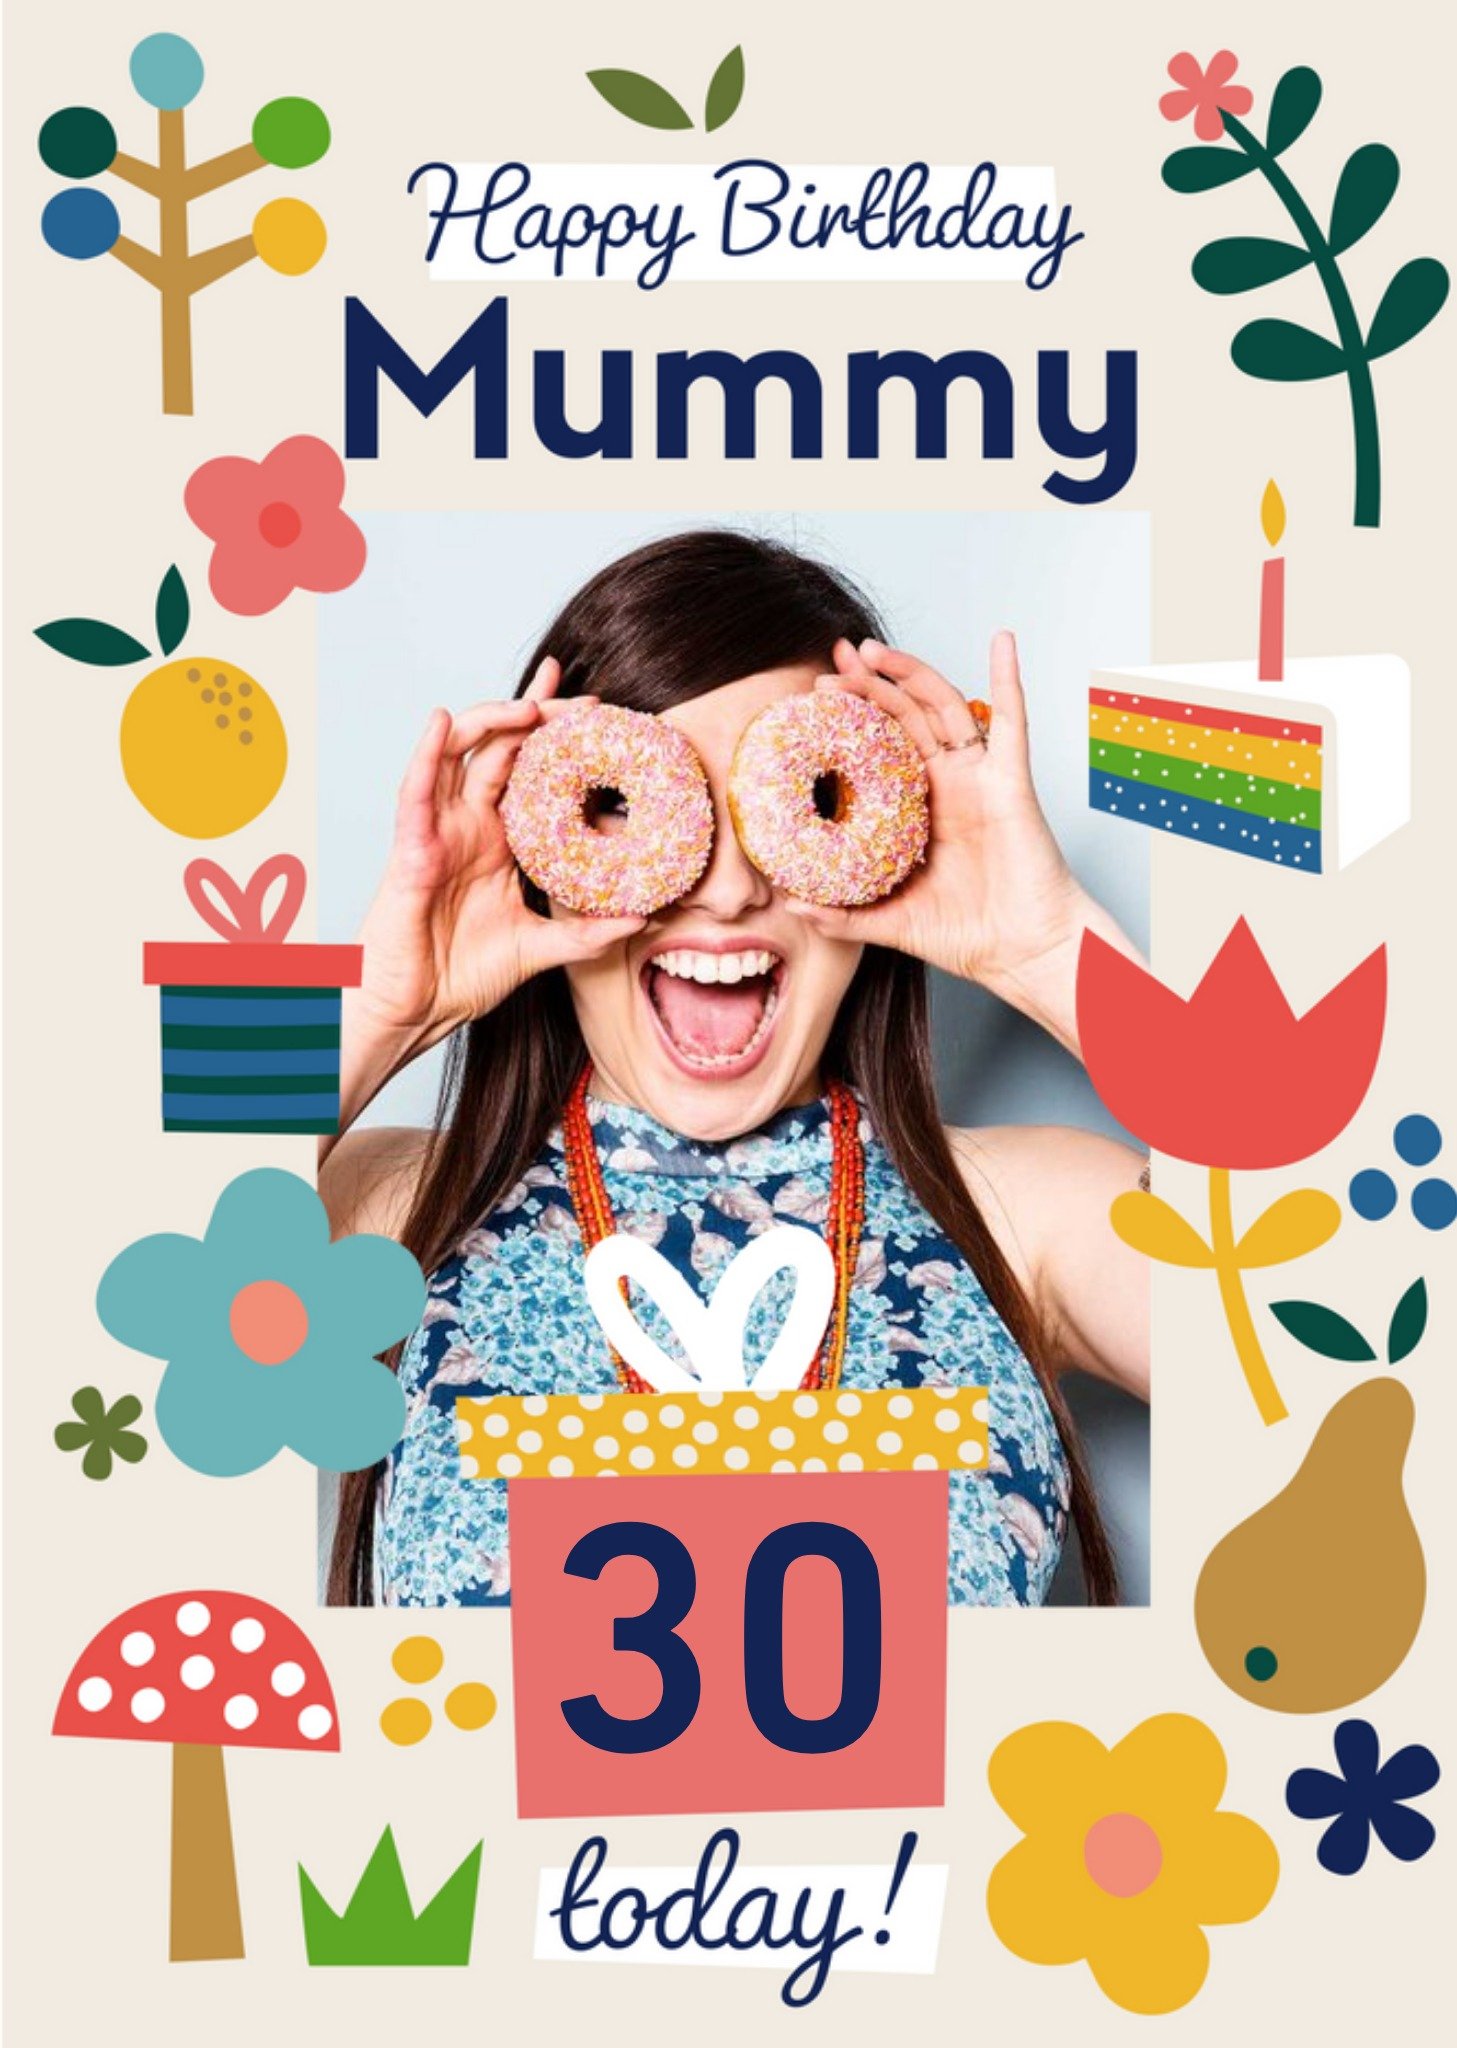 Moonpig Vibrant Spot Illustrations Including Cake And Presents Mummy's Photo Upload Birthday Card, L